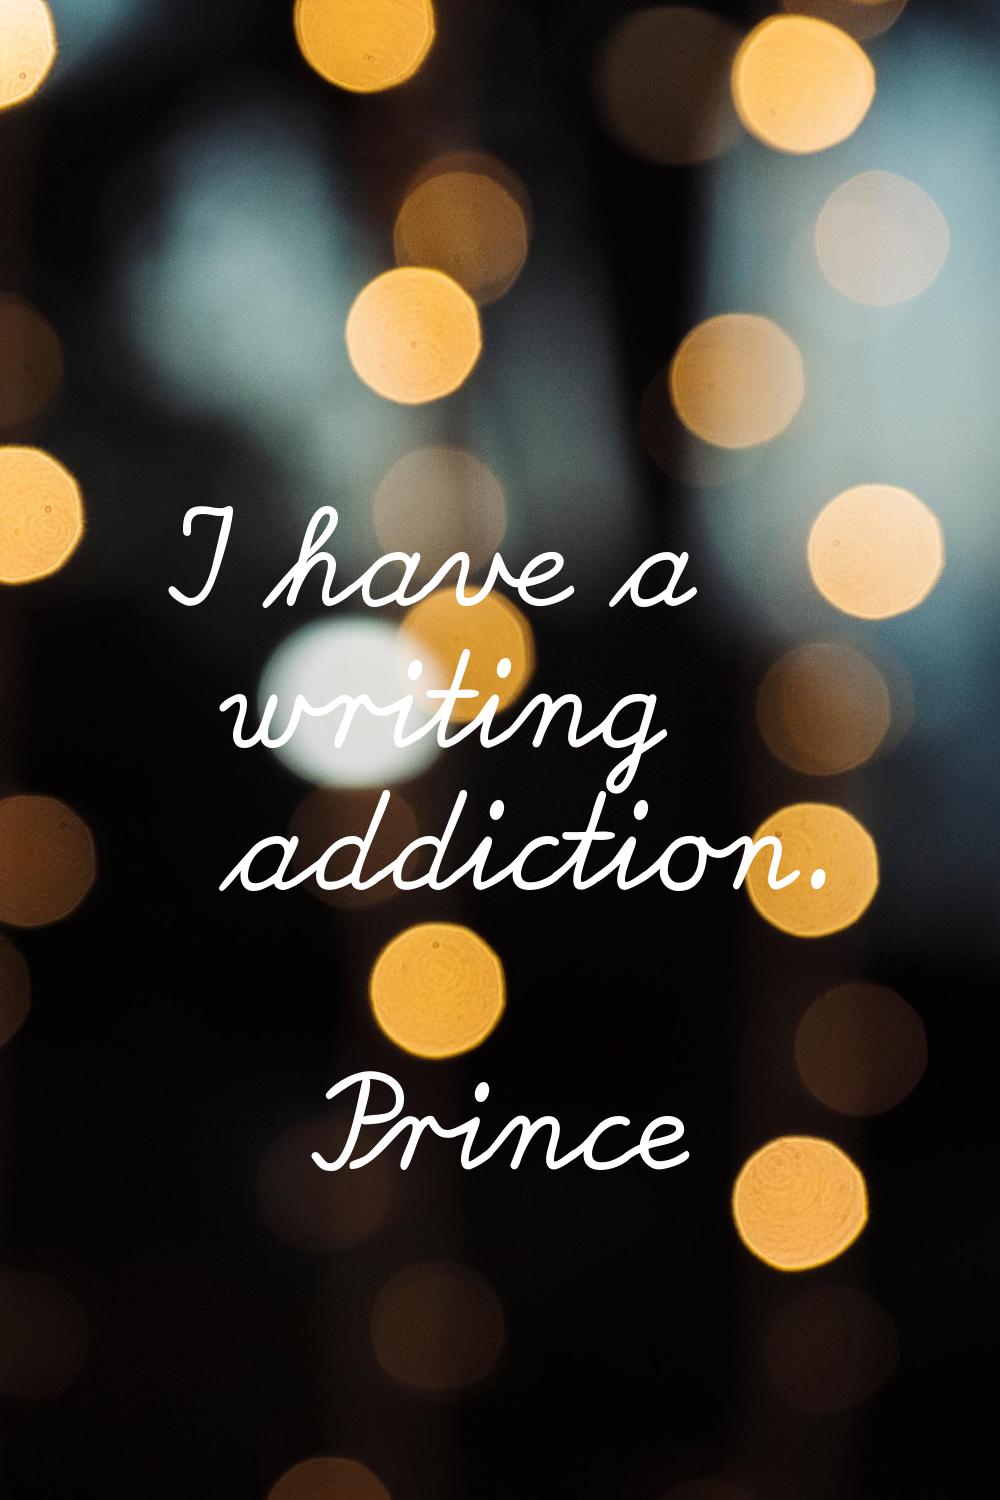 I have a writing addiction.